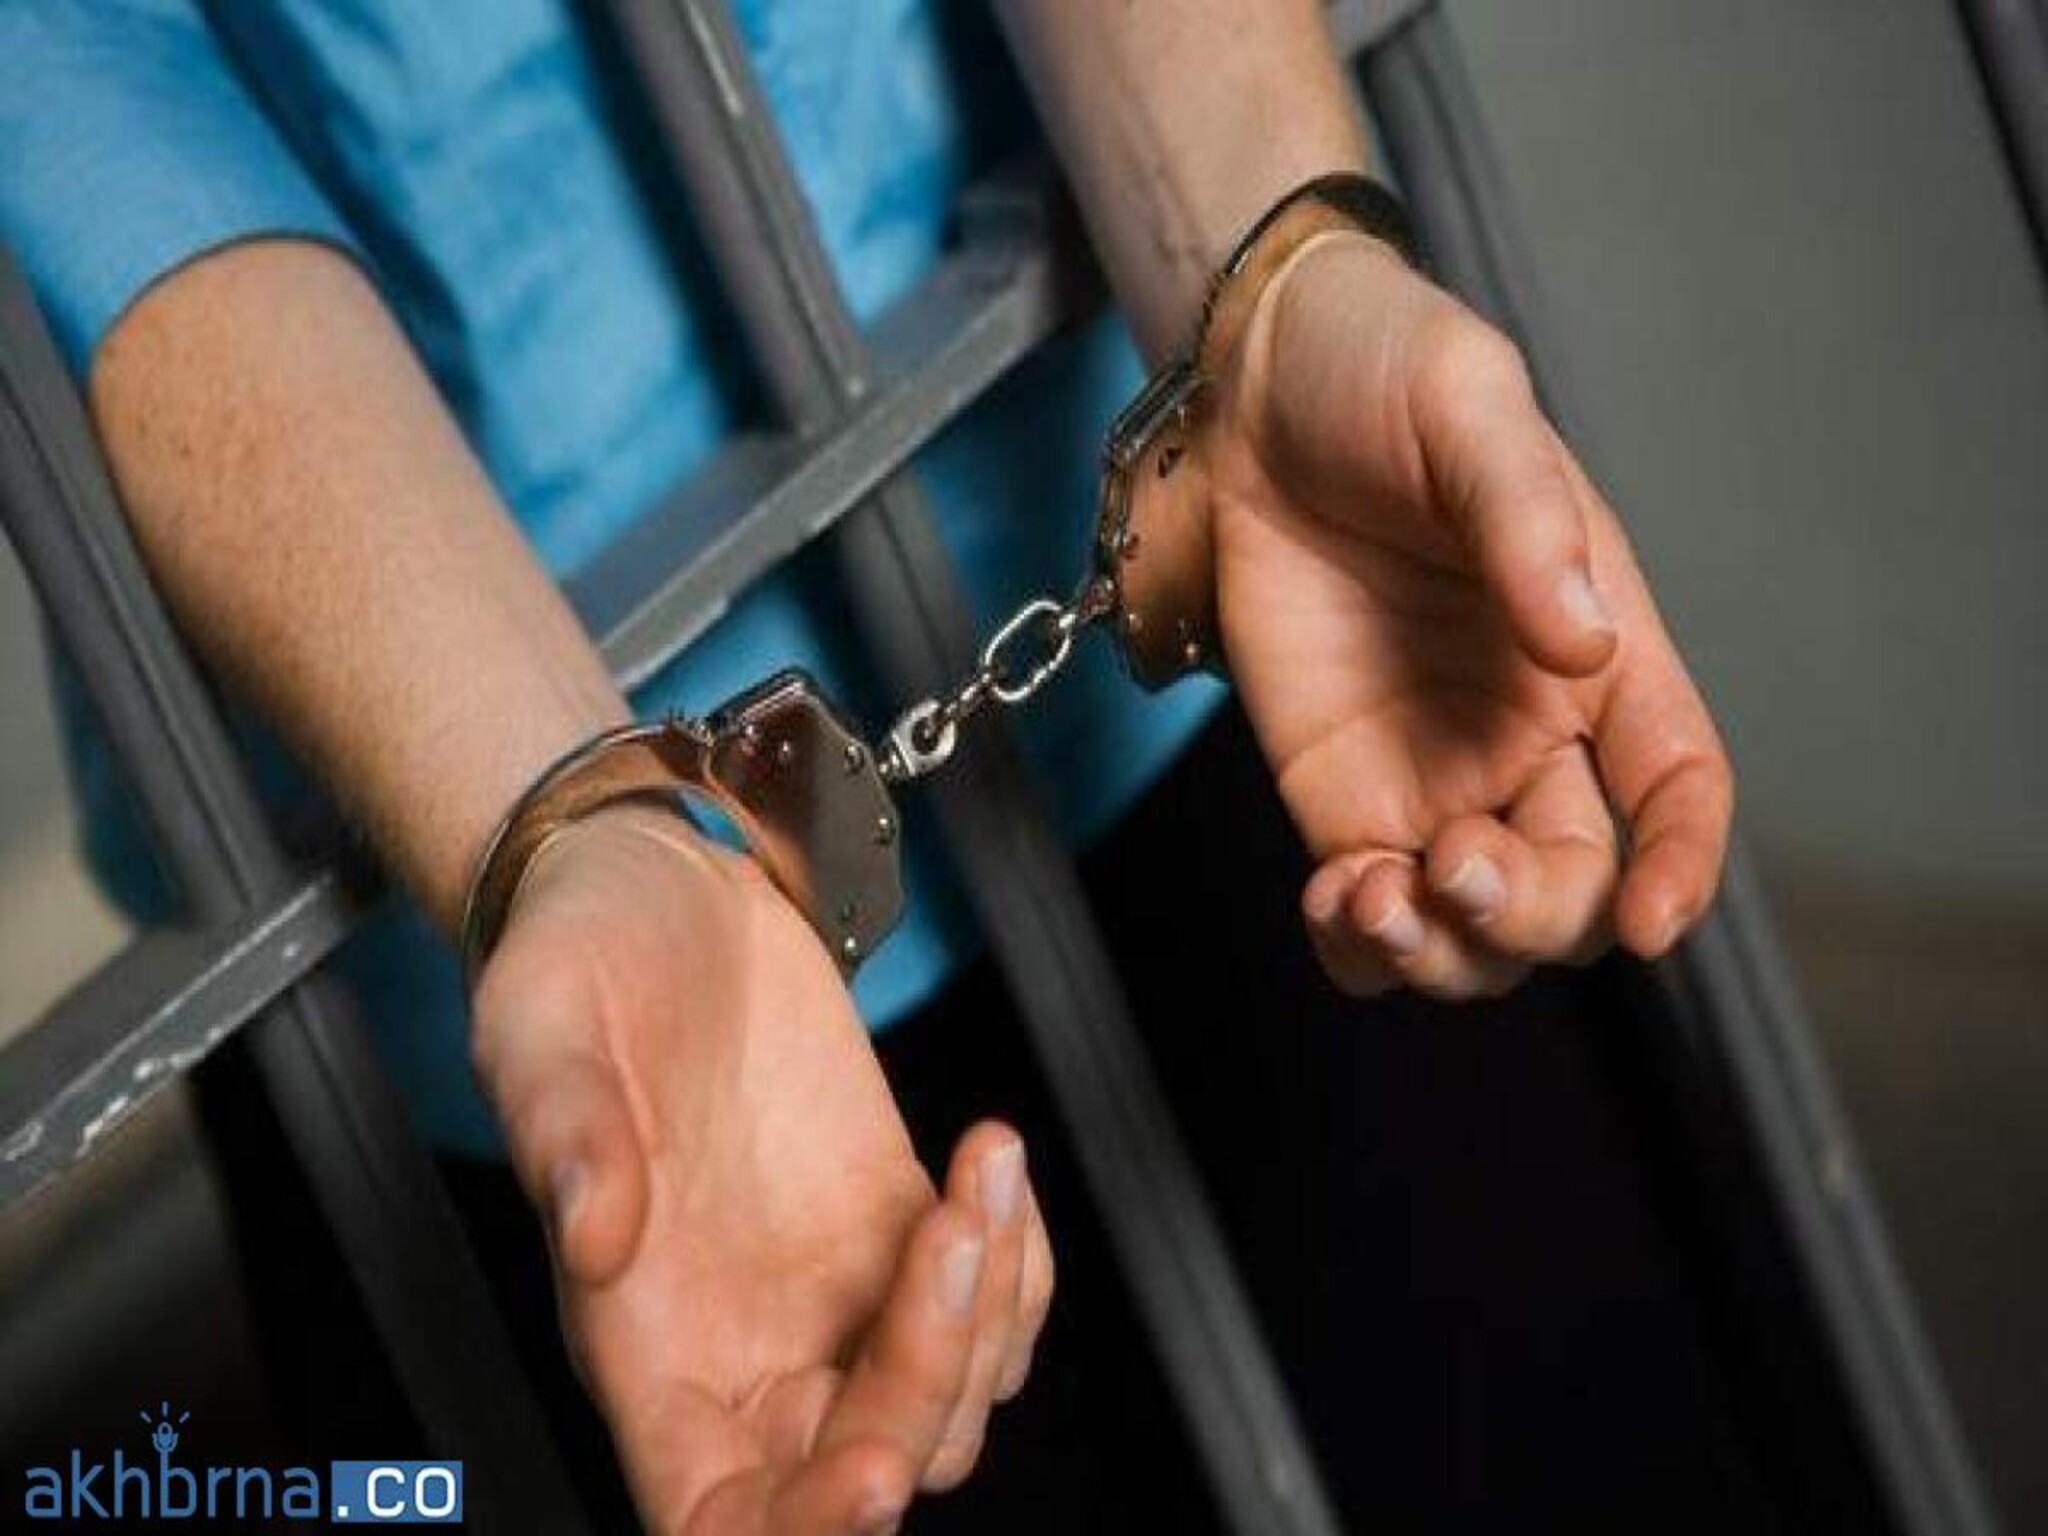 UAE: Authorities Seize 11kg of Drugs, Arrest 2 Smugglers in Ras Al Khaimah